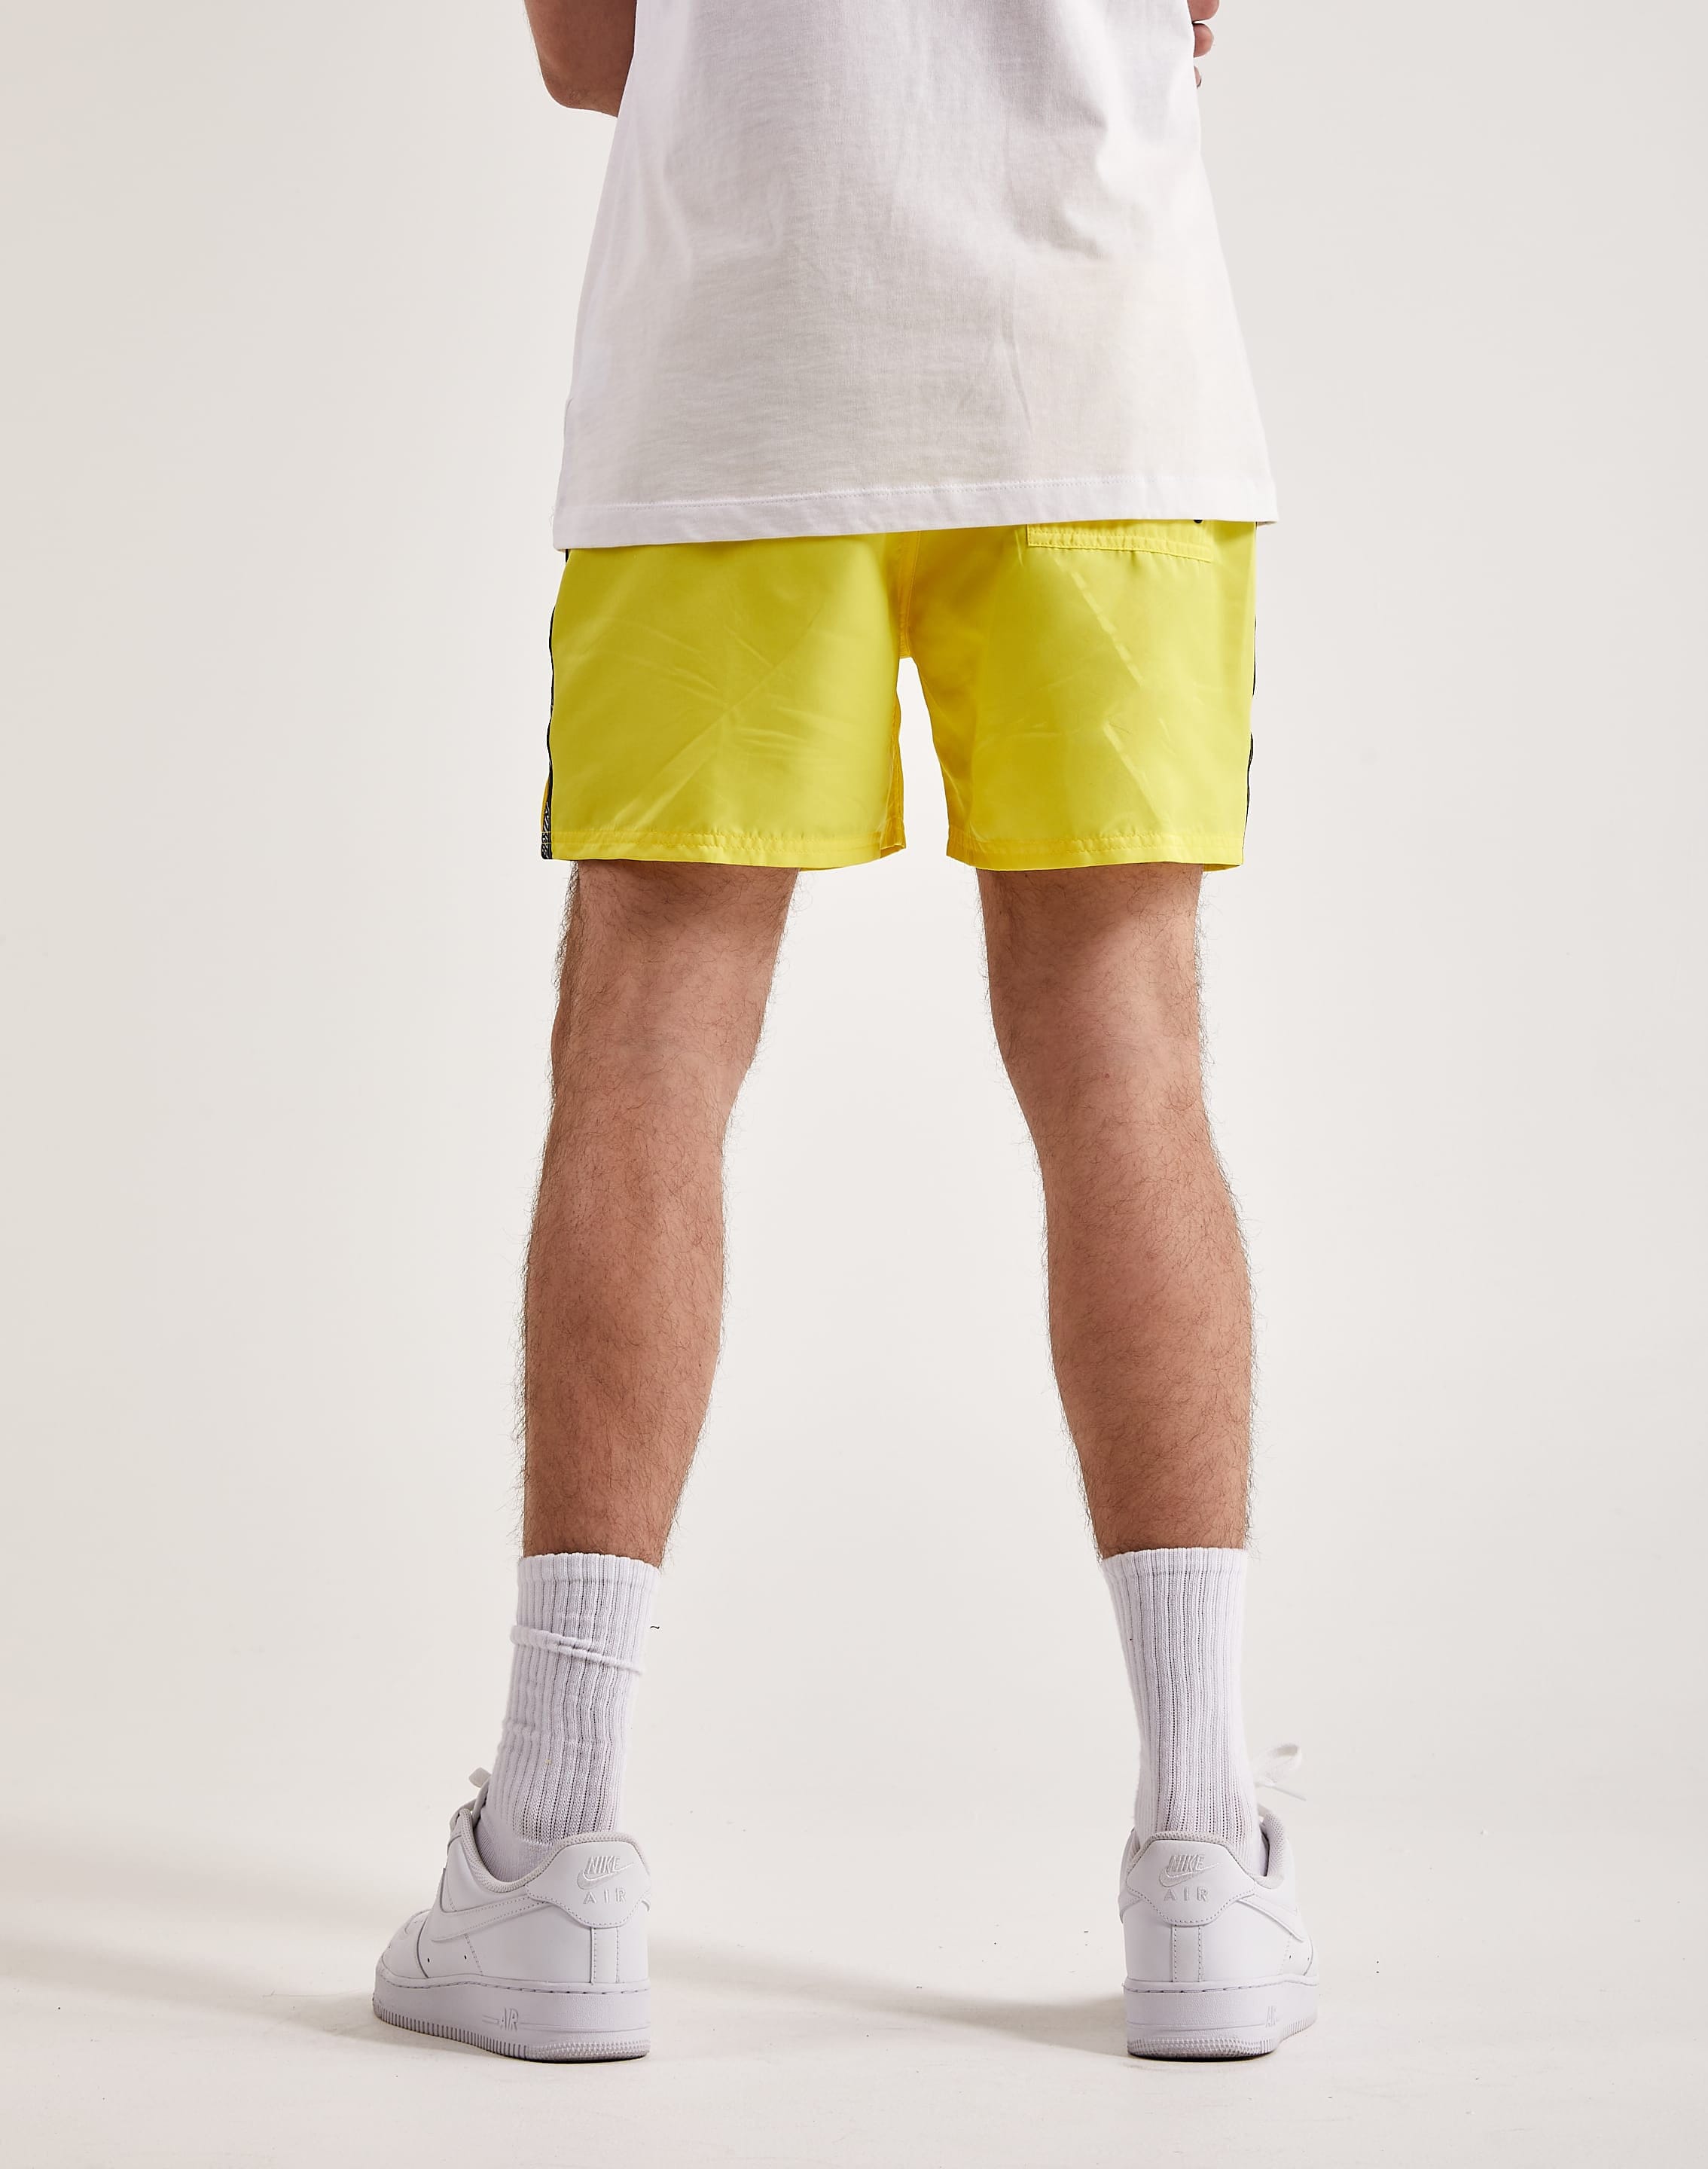 Nike Men's Shorts - Yellow - M